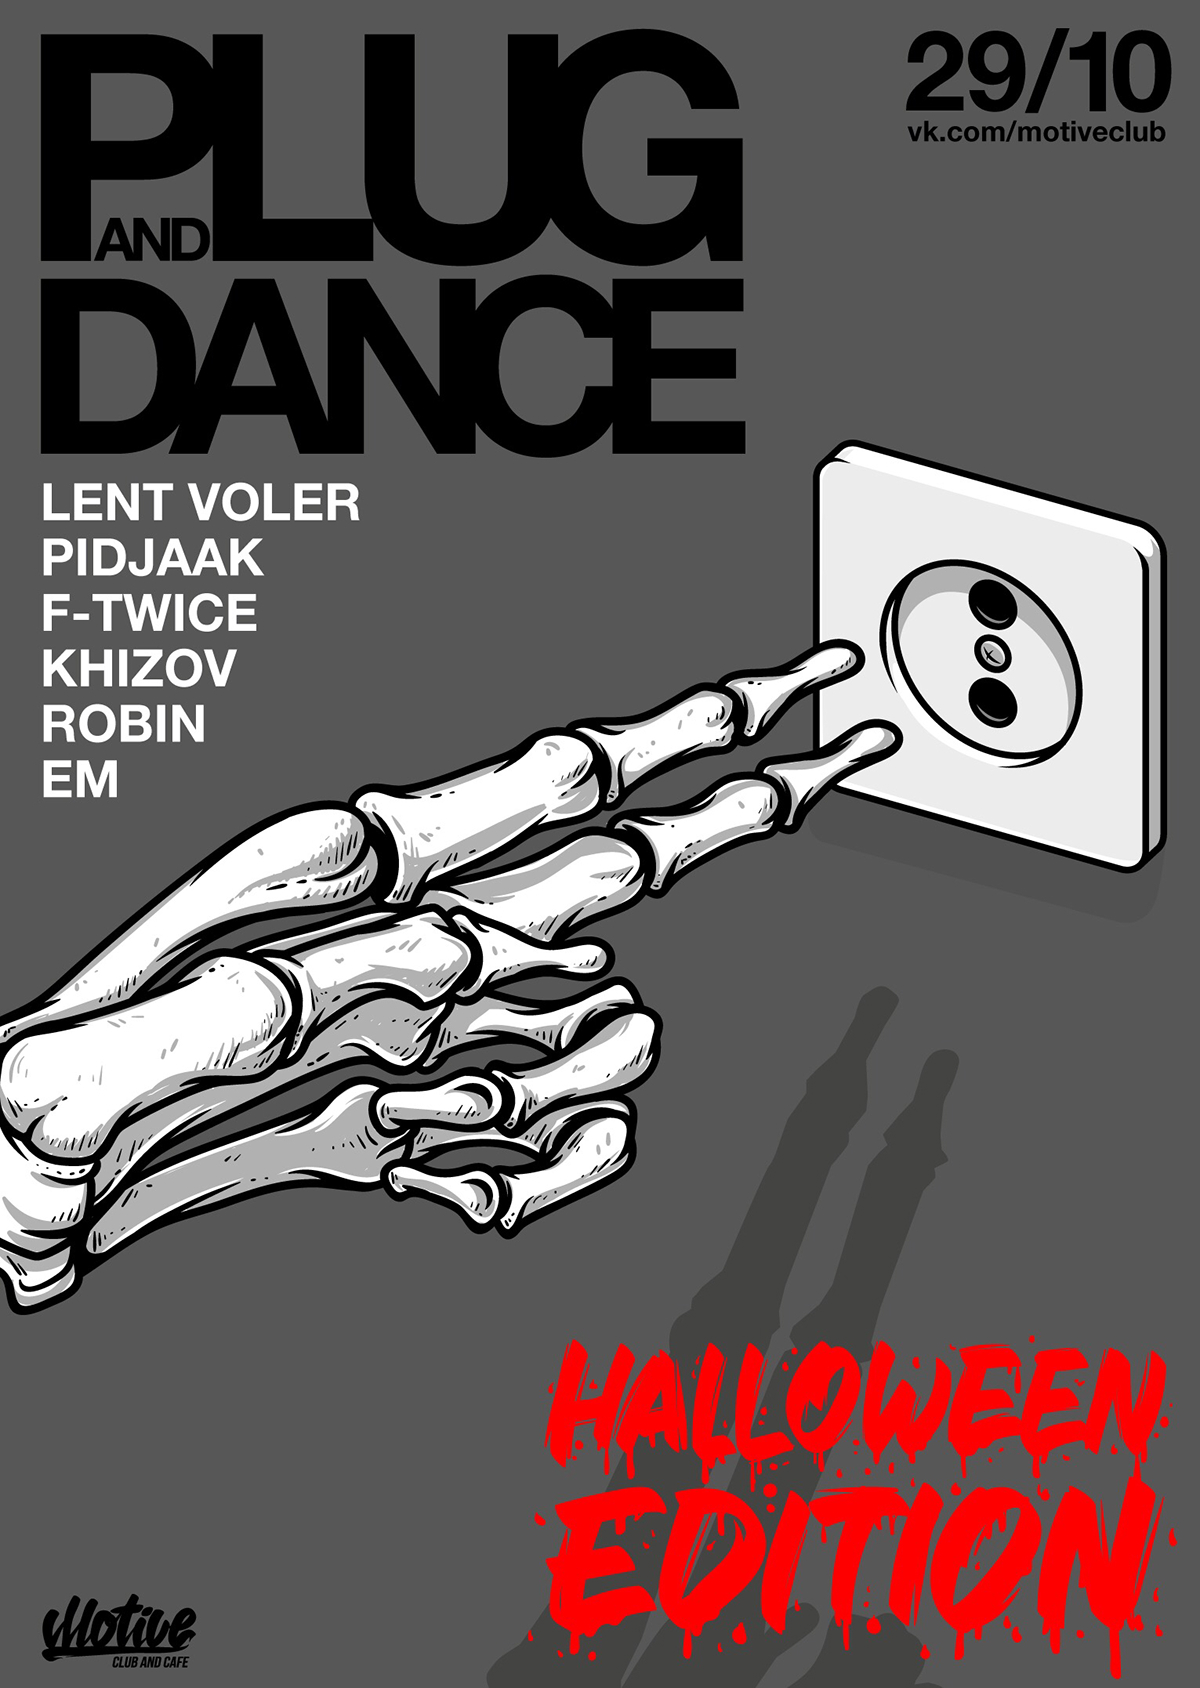 Event poster DANCE   party nightclub art